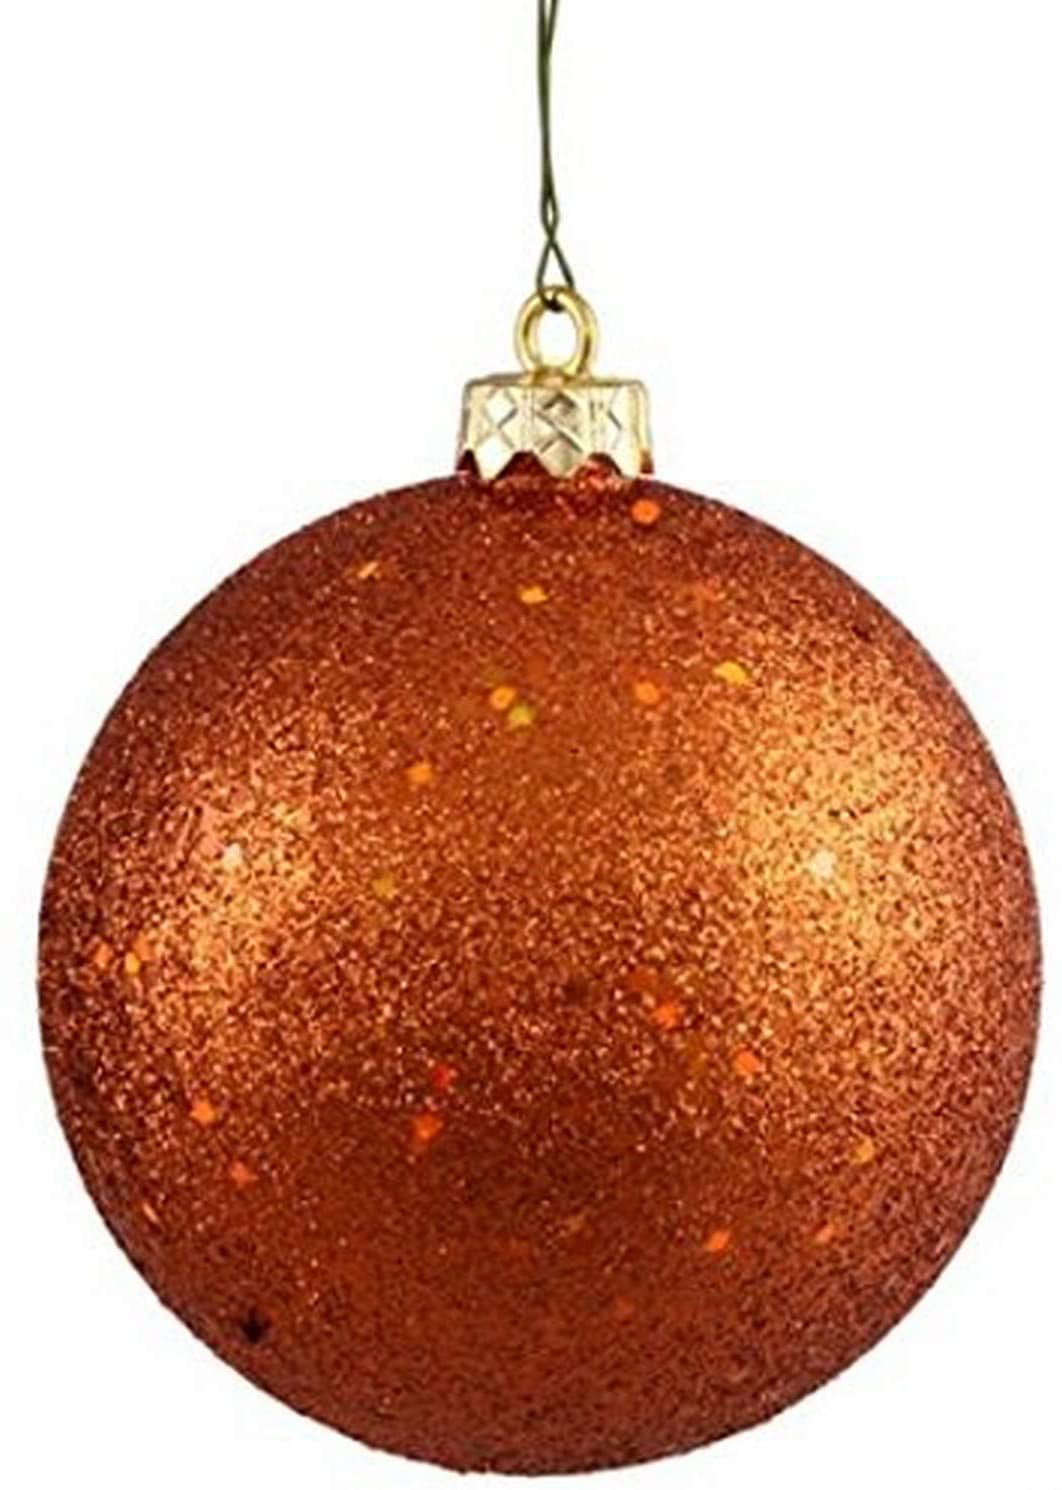 GOLD GLITTER STAR MULTI-COLORED GLASS BALL HOLIDAY CHRISTMAS ORNAMENTS NIB 